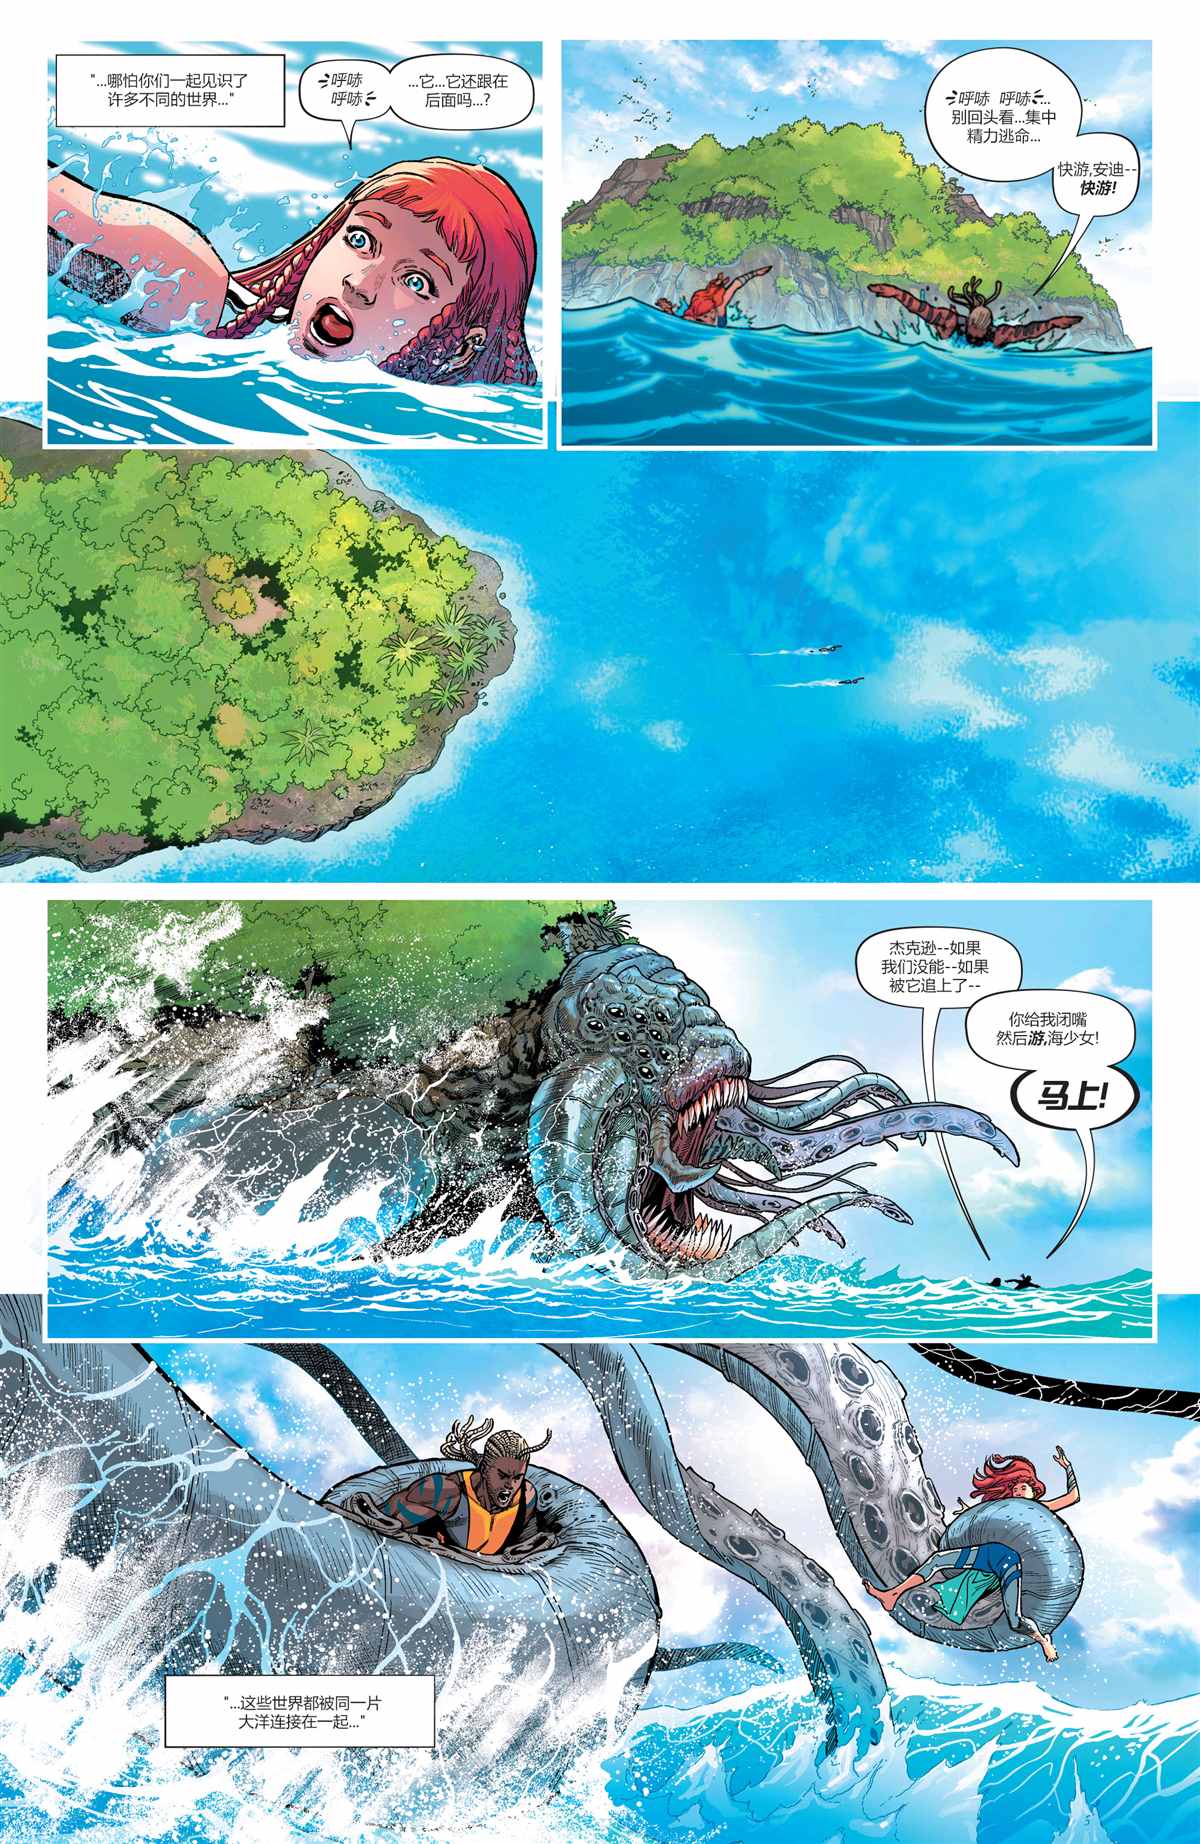 DC未來態 - 水行俠#1 - 3